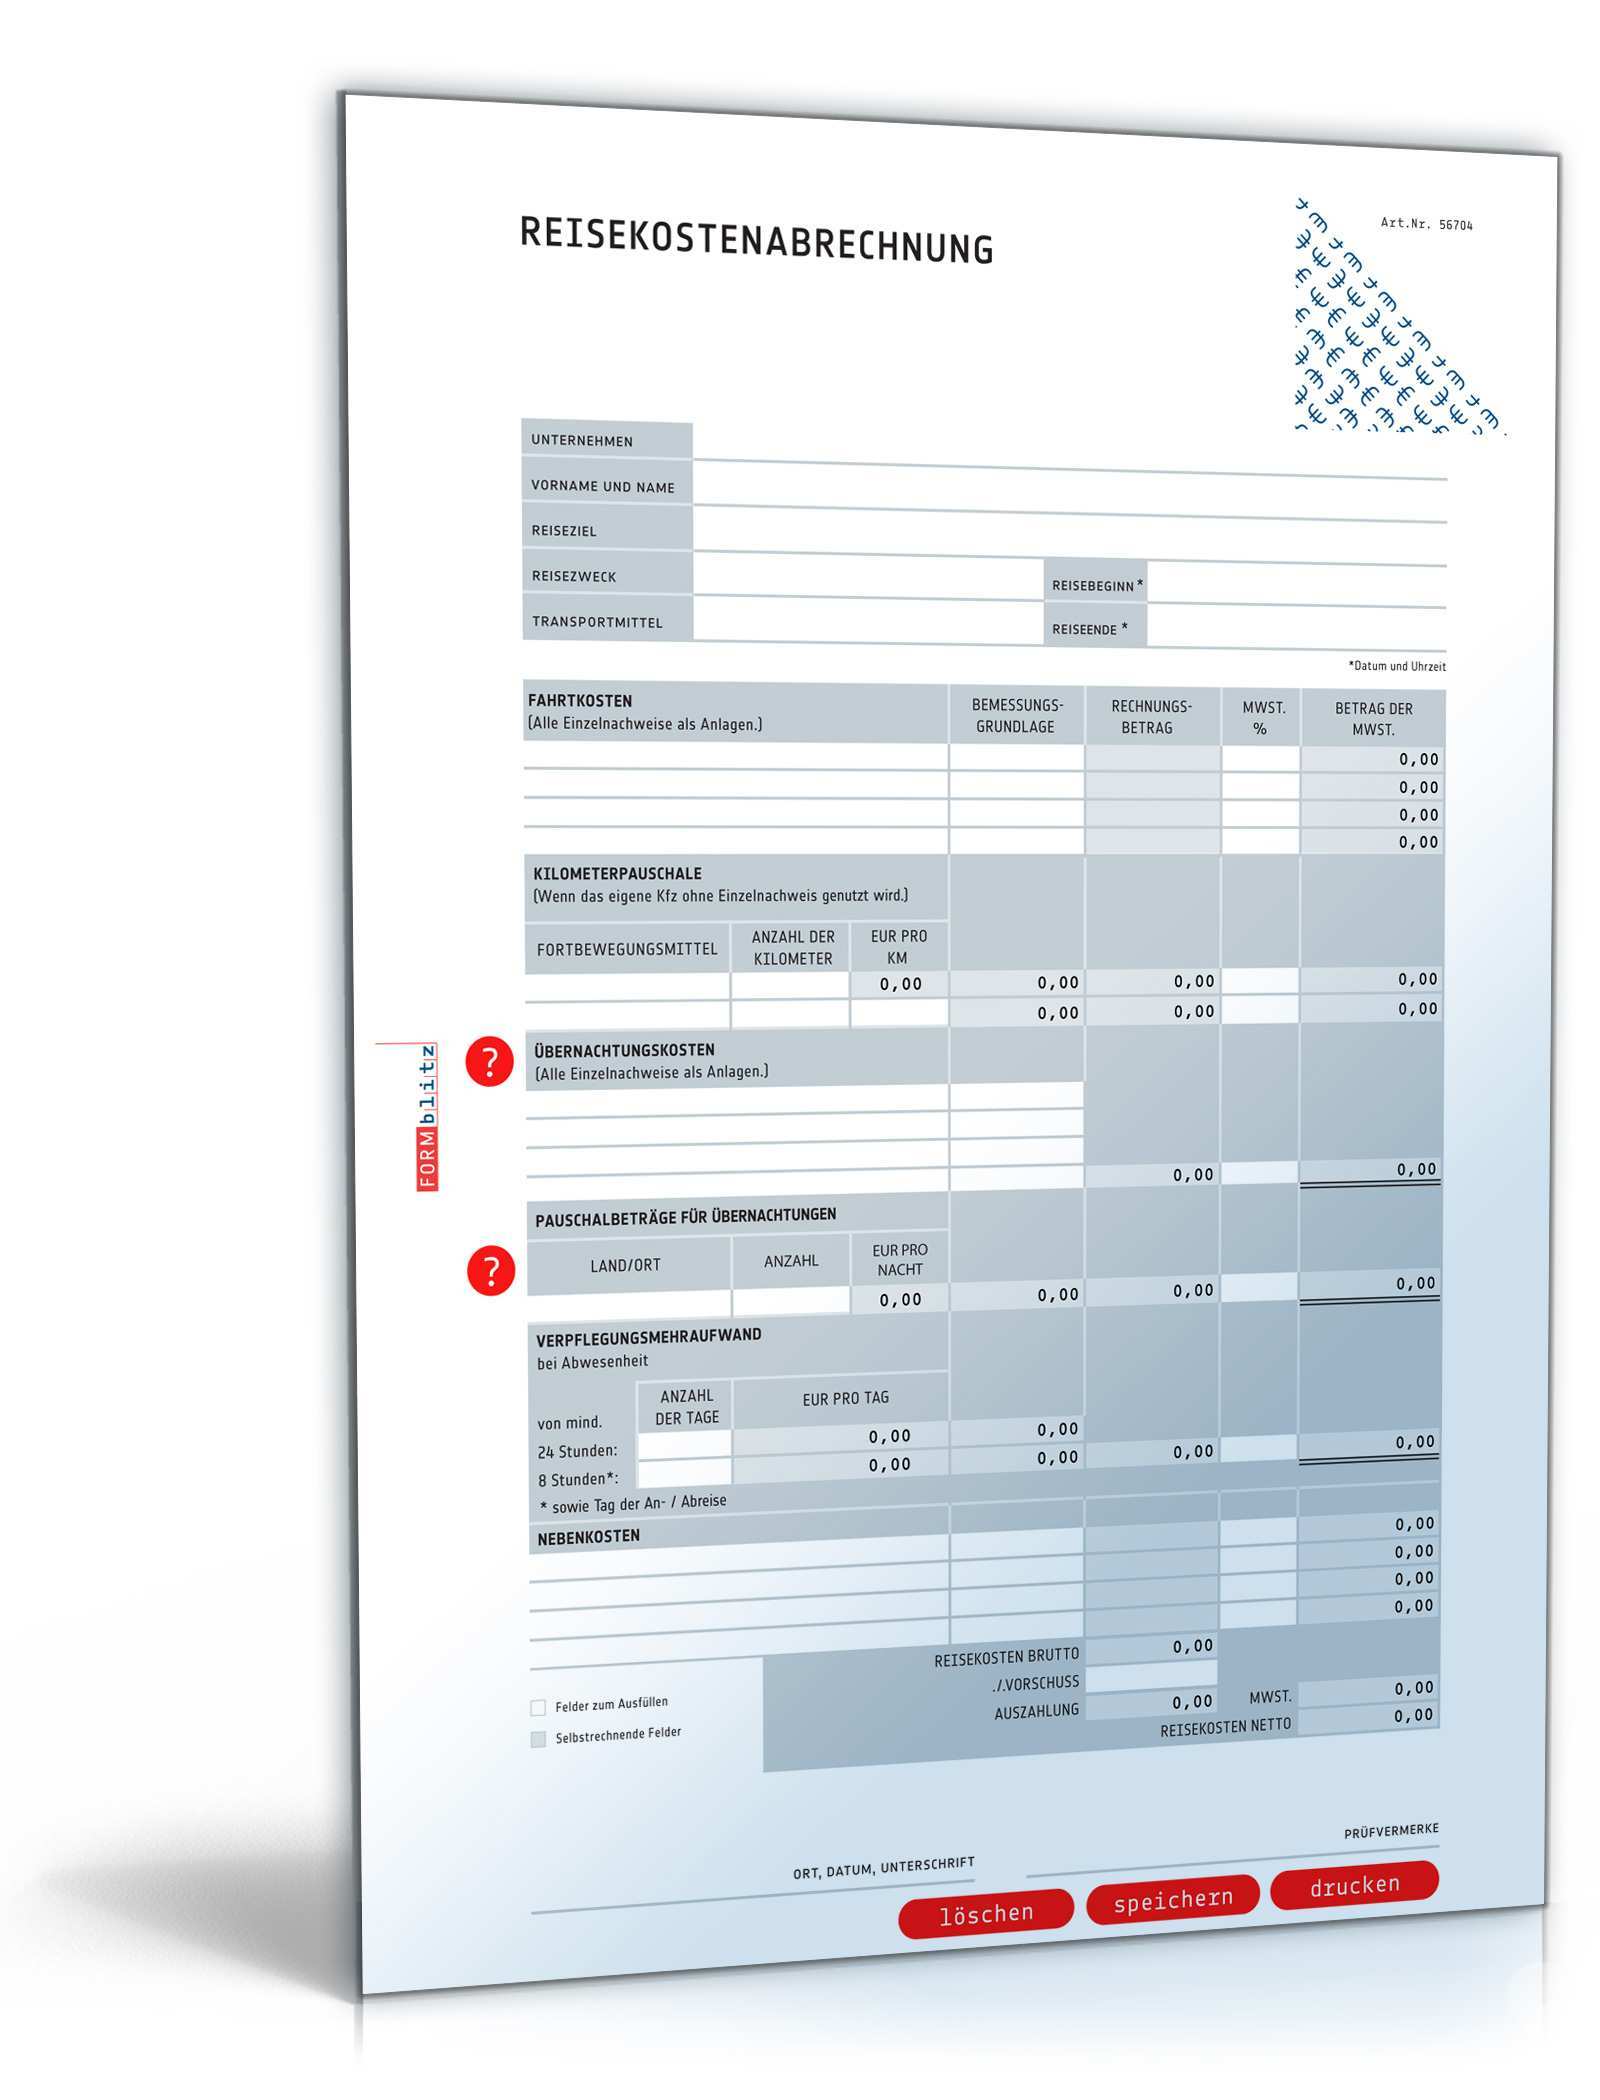 Reisekostenabrechnung 2014 De Tabelle Download